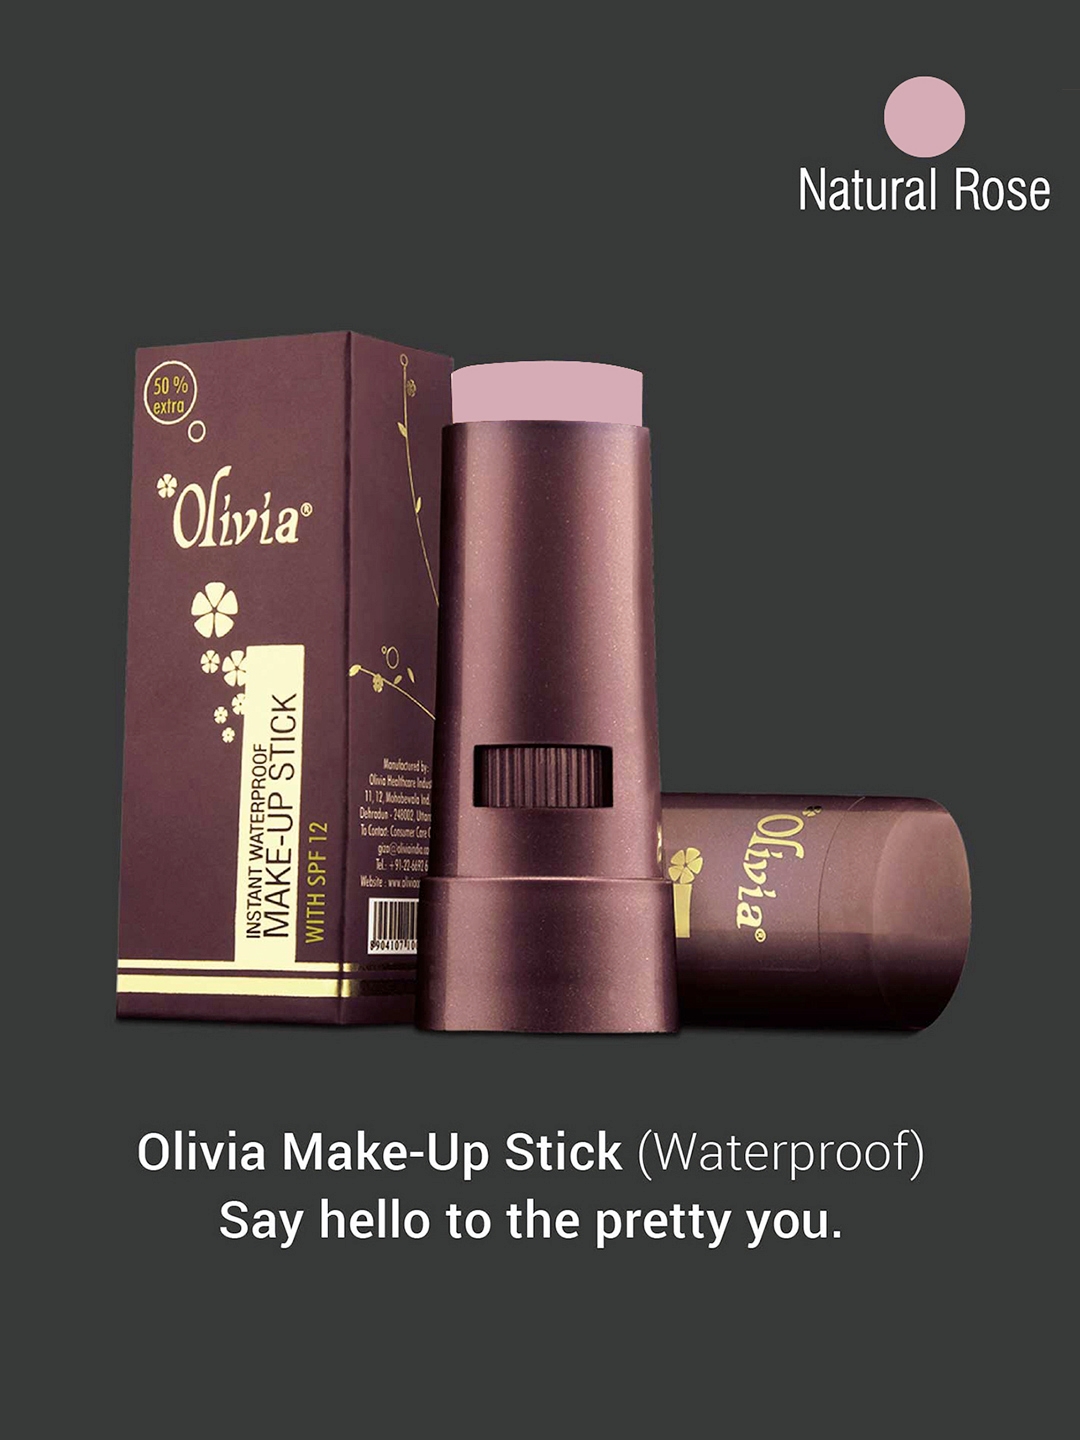 Olivia Pack of 2 Waterproof Natural Rose Makeup Stick Concealer 15g Shade No.4  SPF 12 